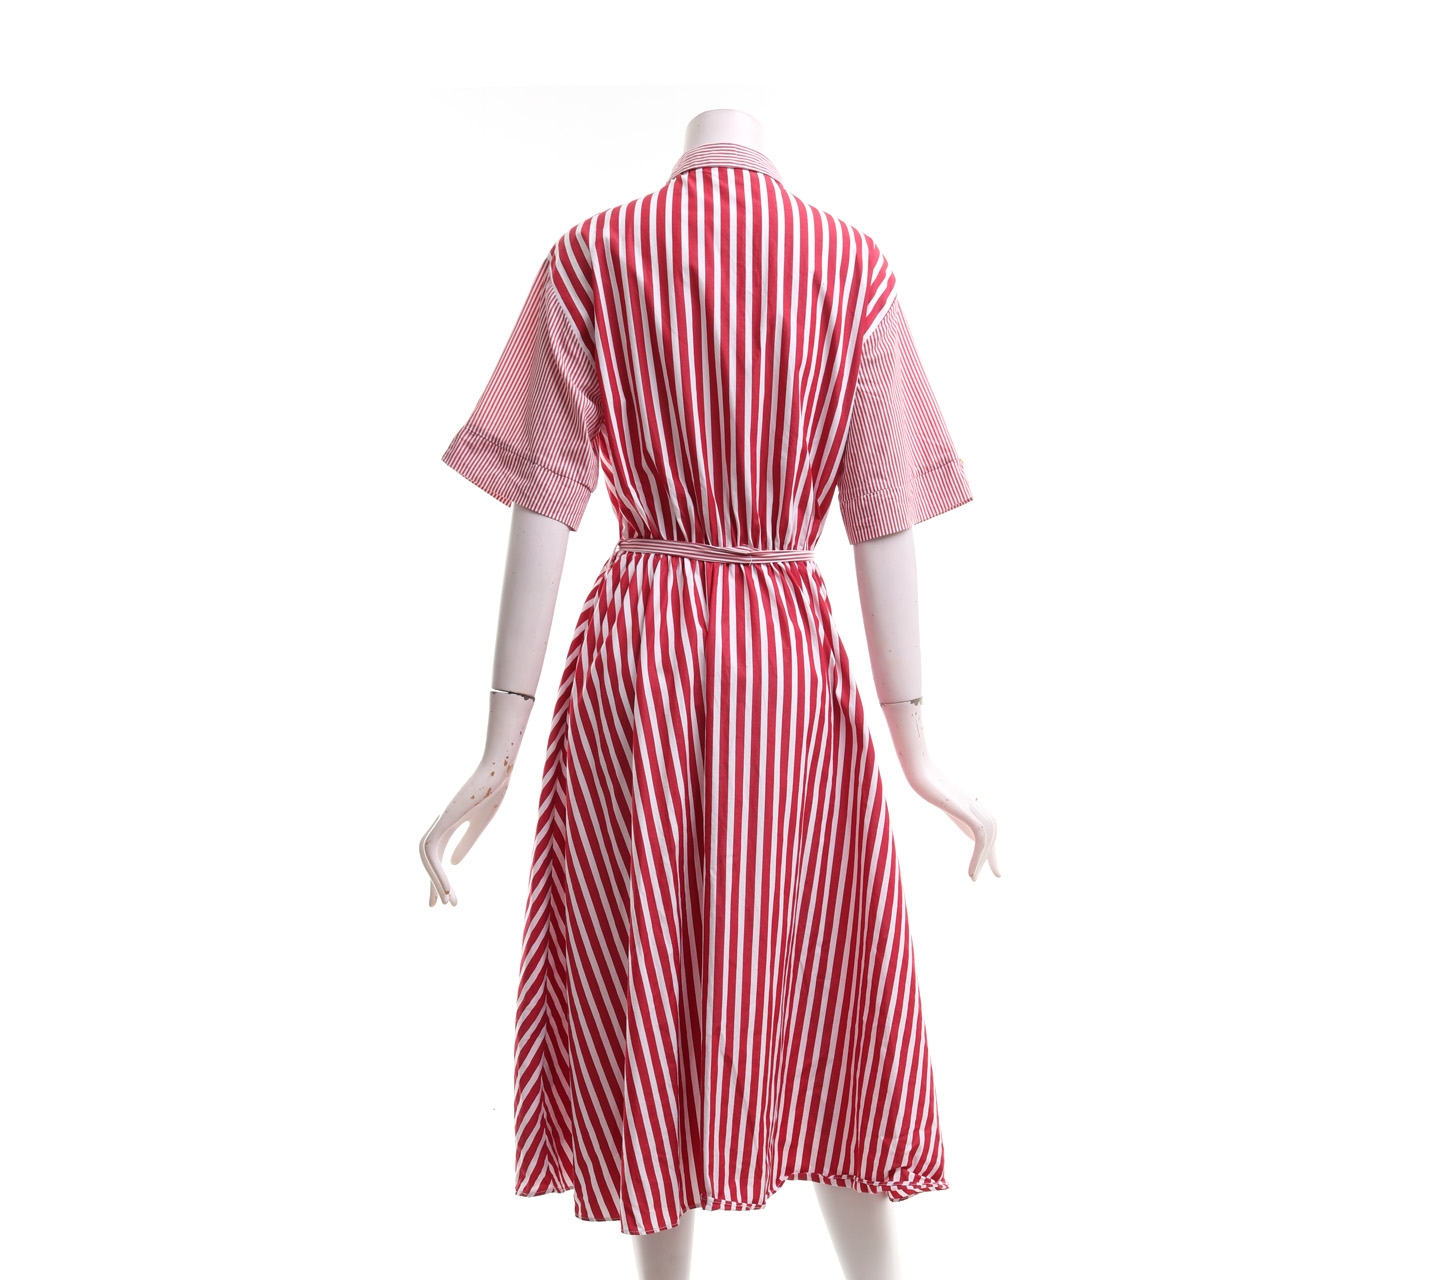 Zara Red and White Striped Midi Dress